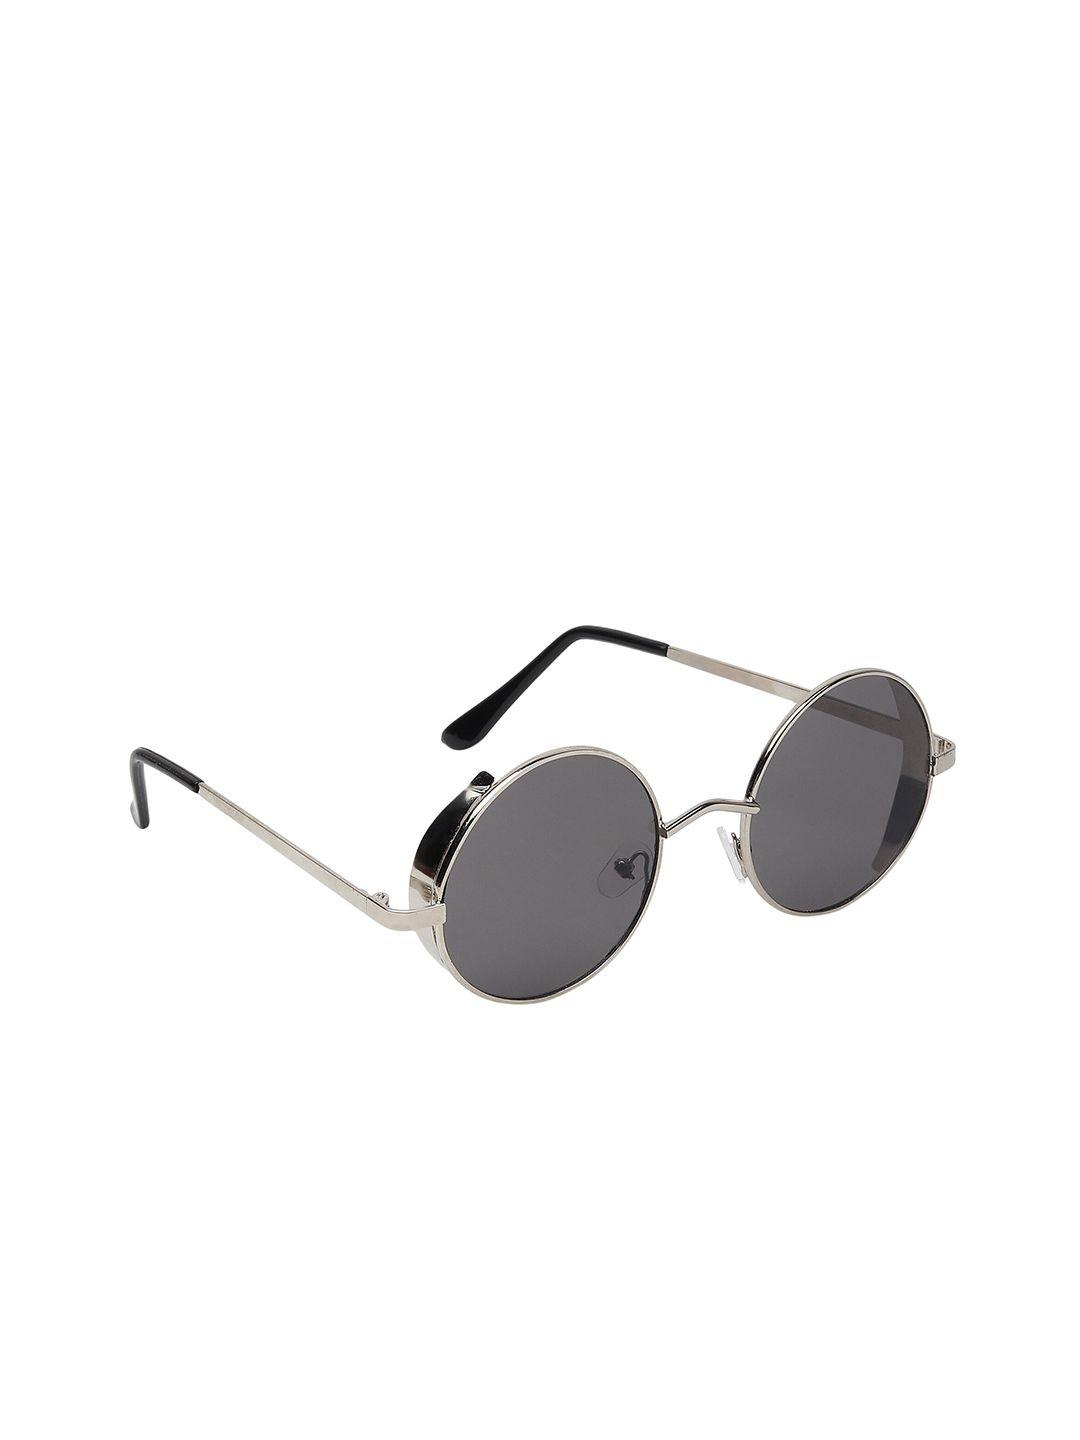 criba unisex grey & gunmetal-toned full rim round sunglasses